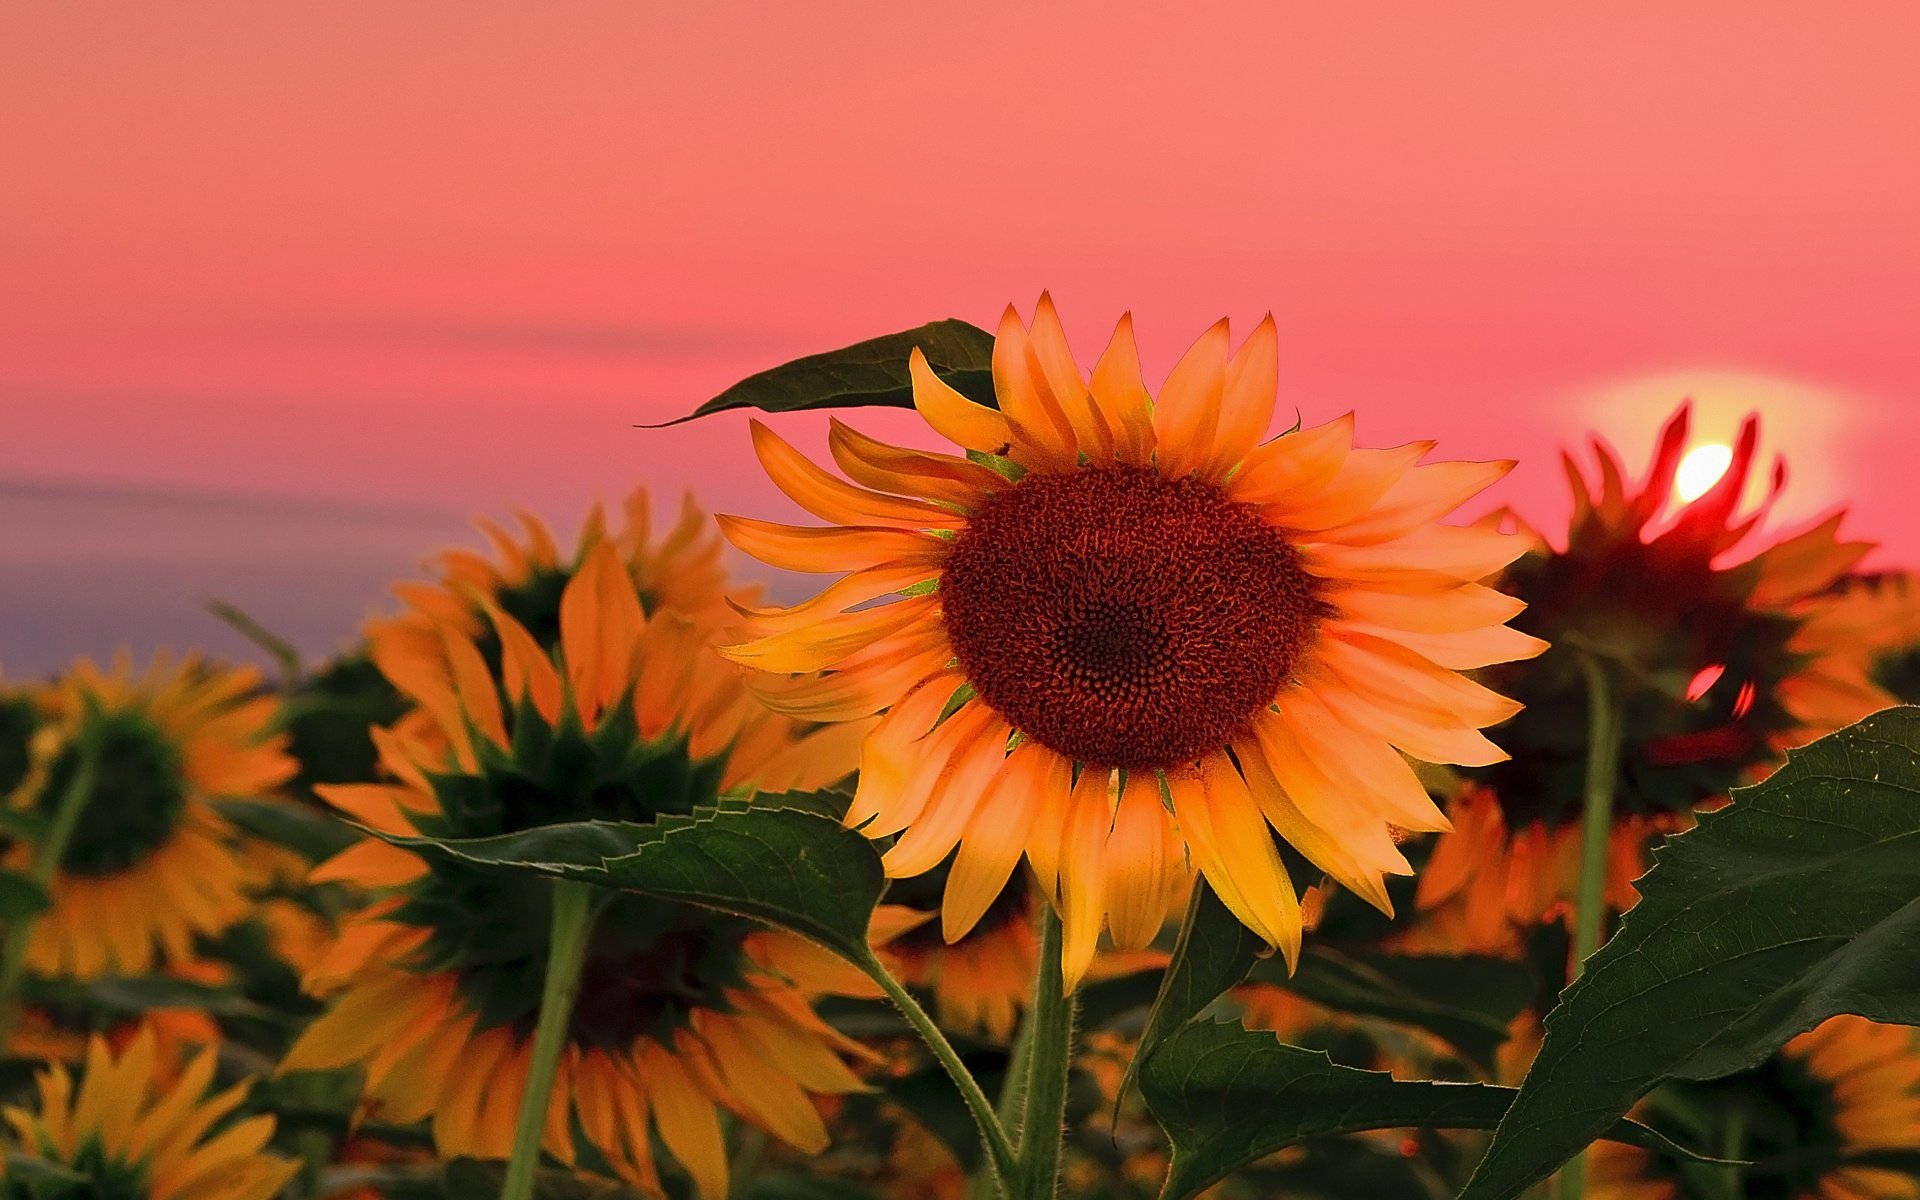 Sunflowers make any desktop background happy! Wallpaper